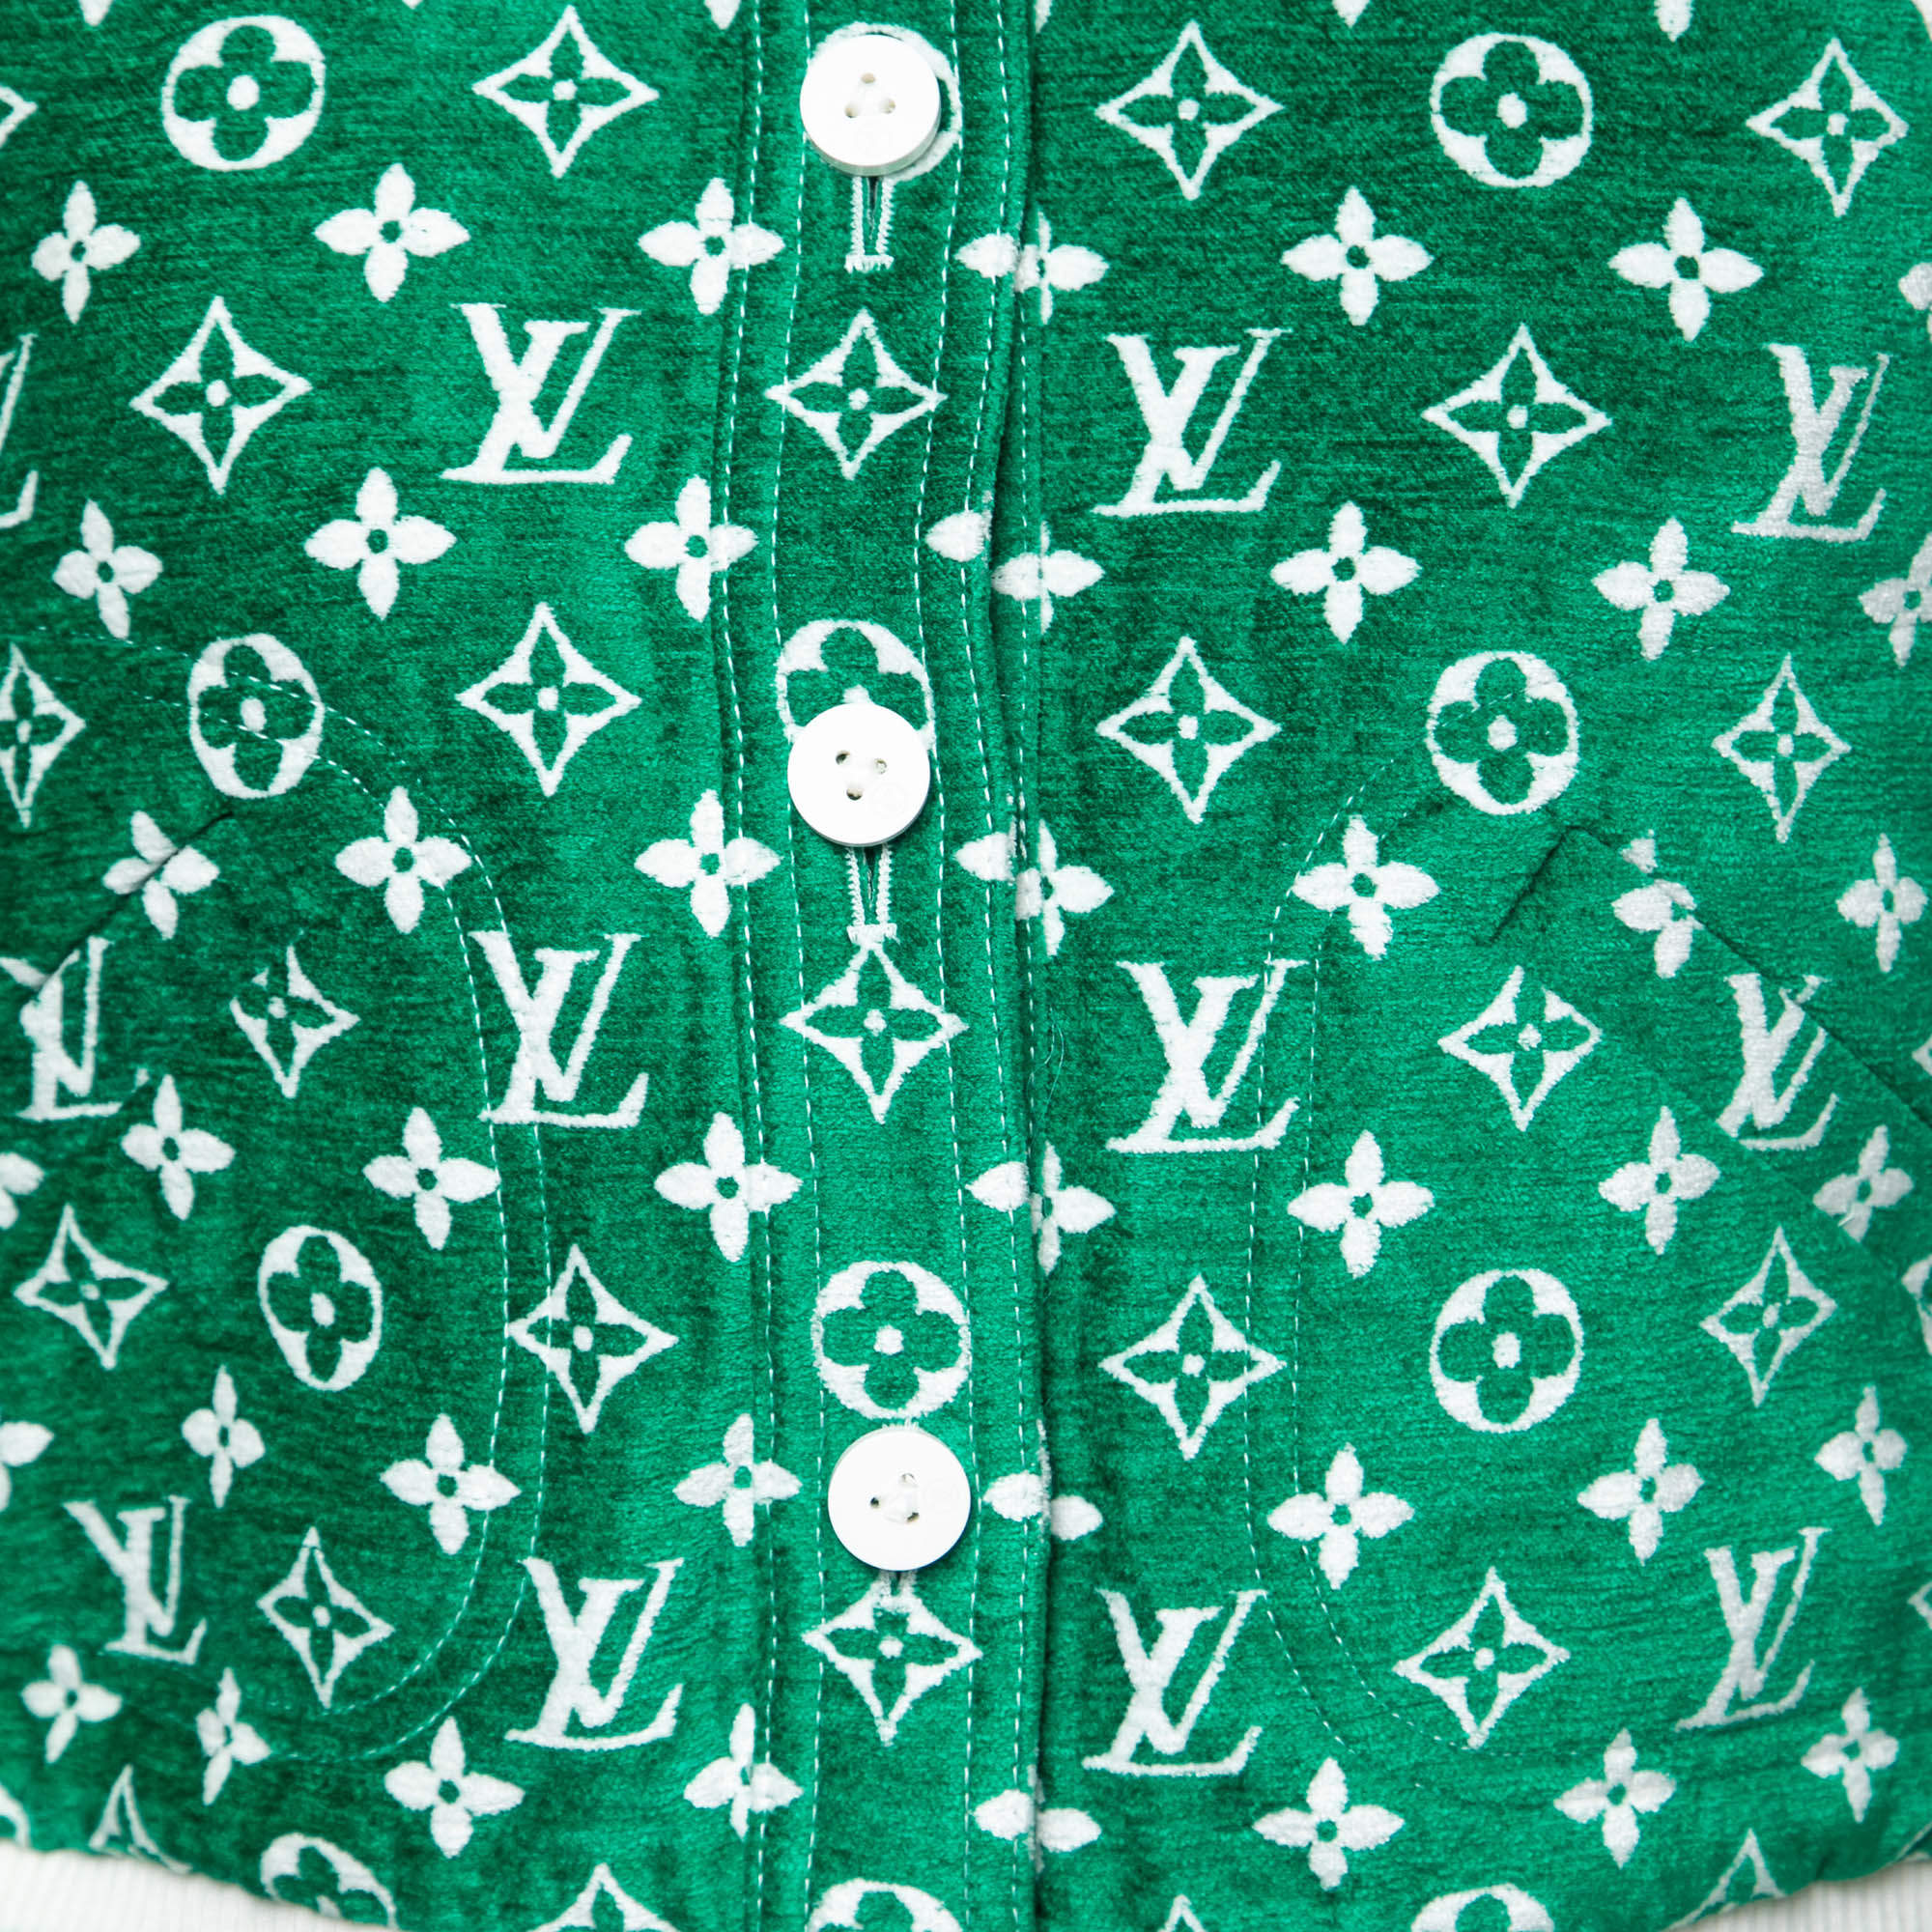 Louis Vuitton Green Monogram Velour Bomber Jacket S